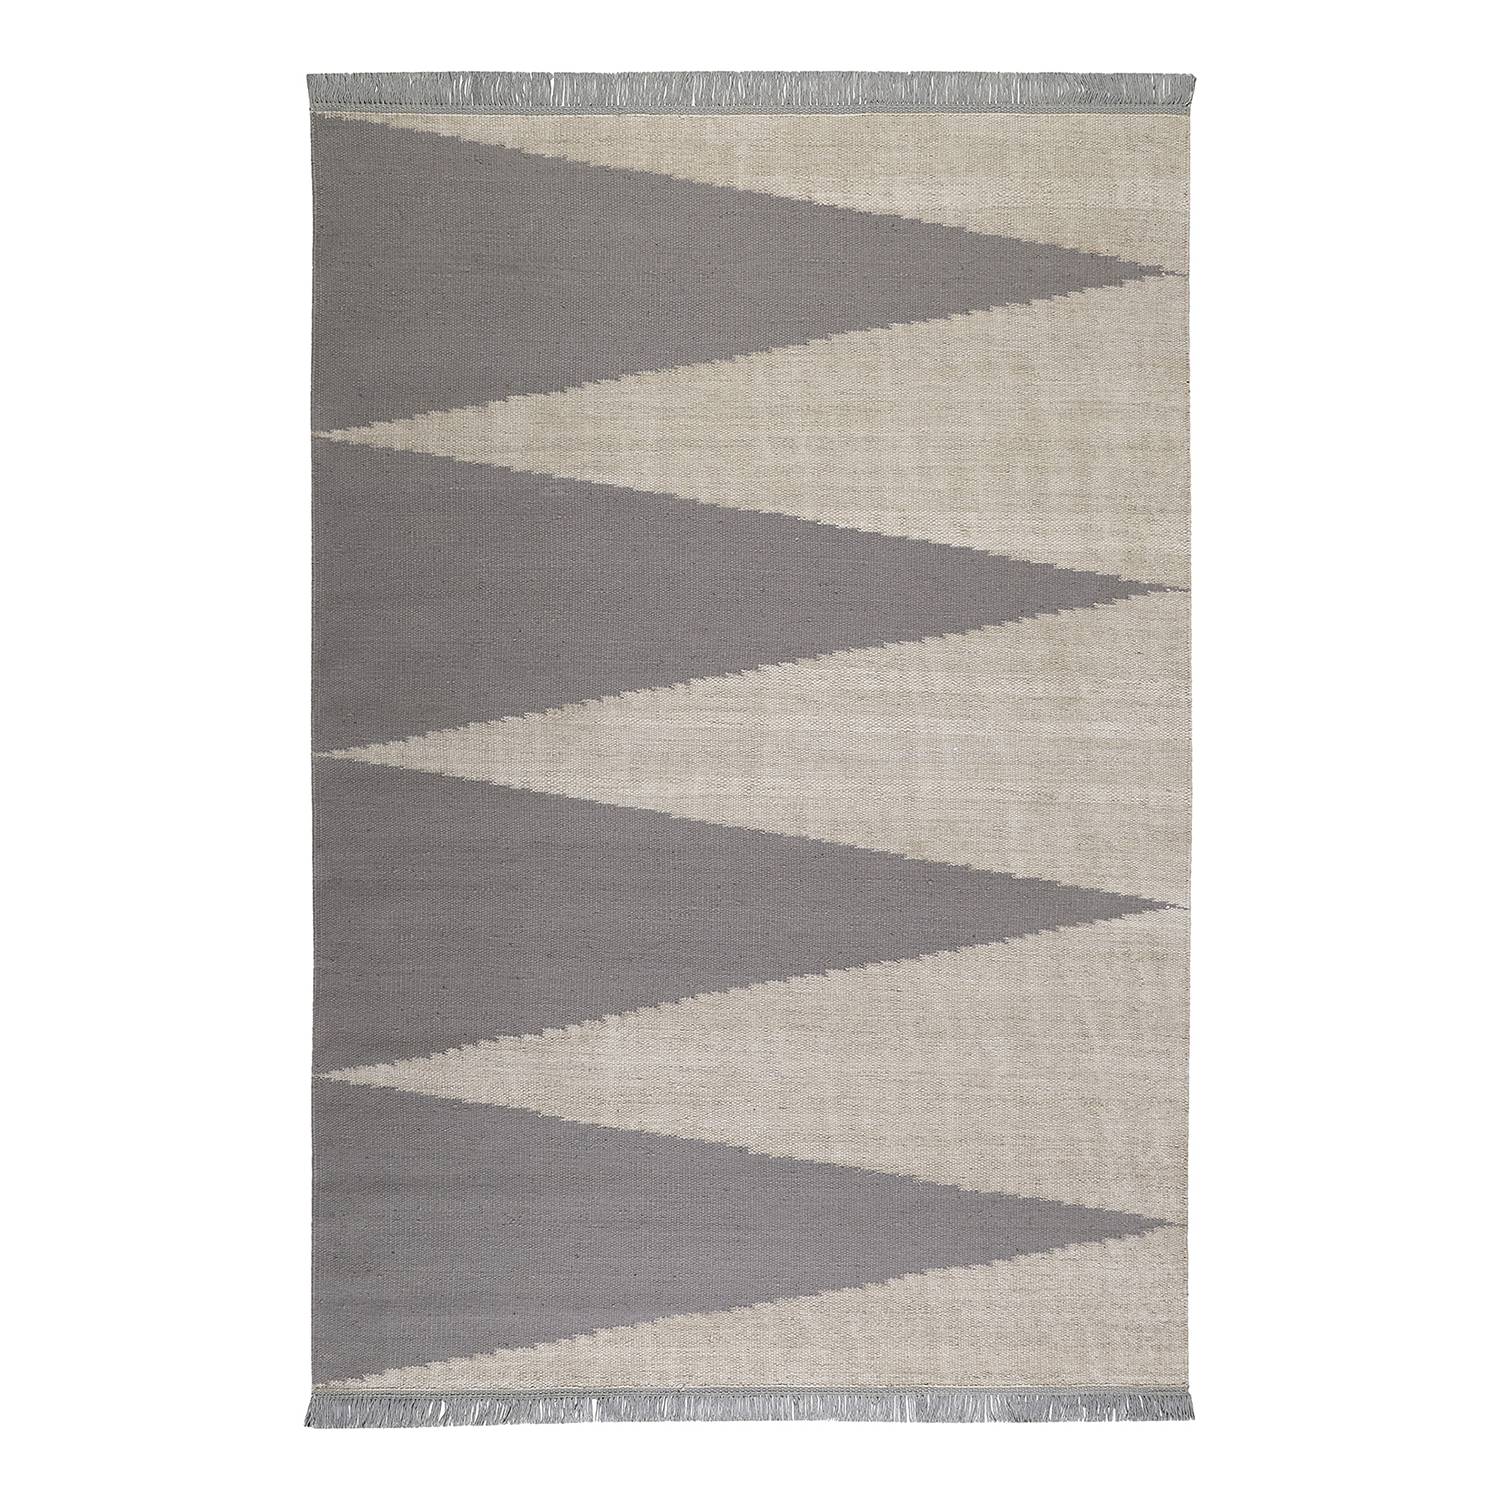 Teppich Smart Triangle (handgewebt) - Mischgewebe - Grau / Creme - 130 x 190 cm, carpets&co